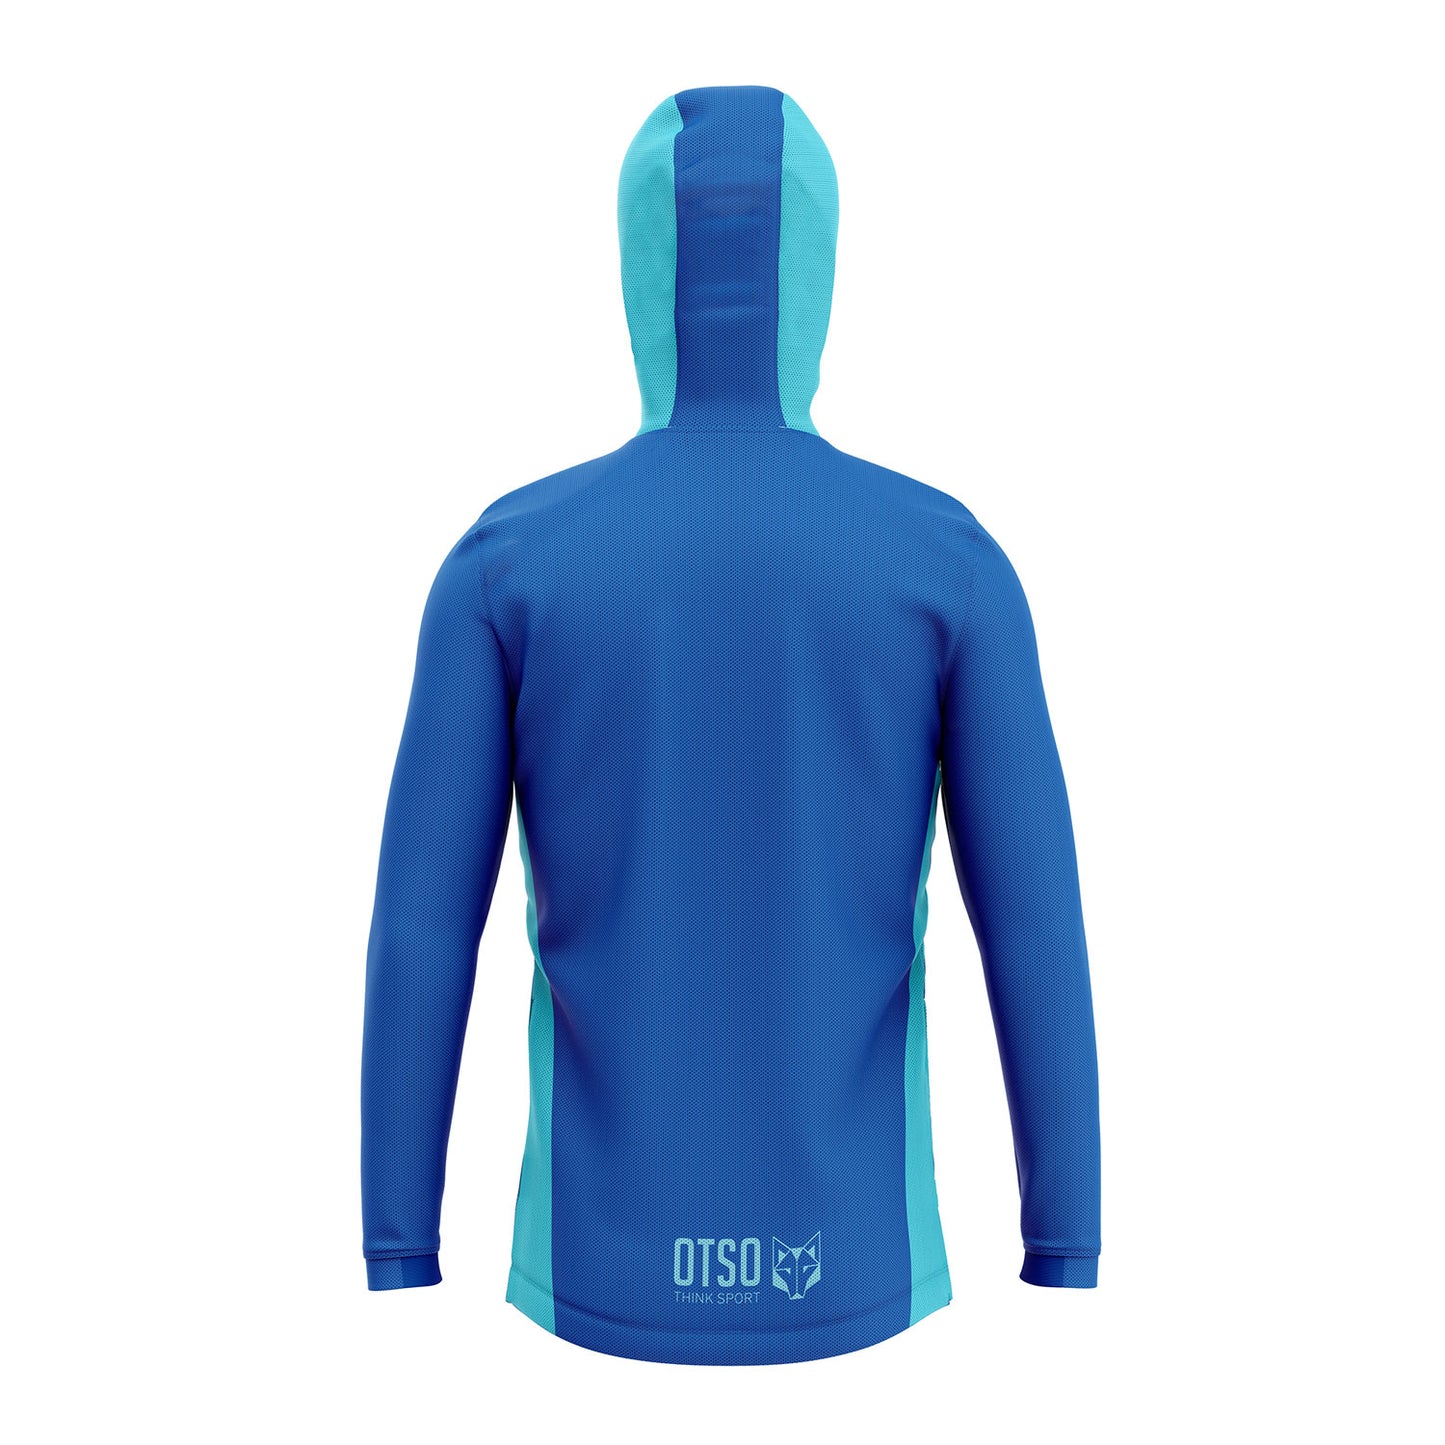 Unisex sport hoodie - Electric Blue & Light Blue